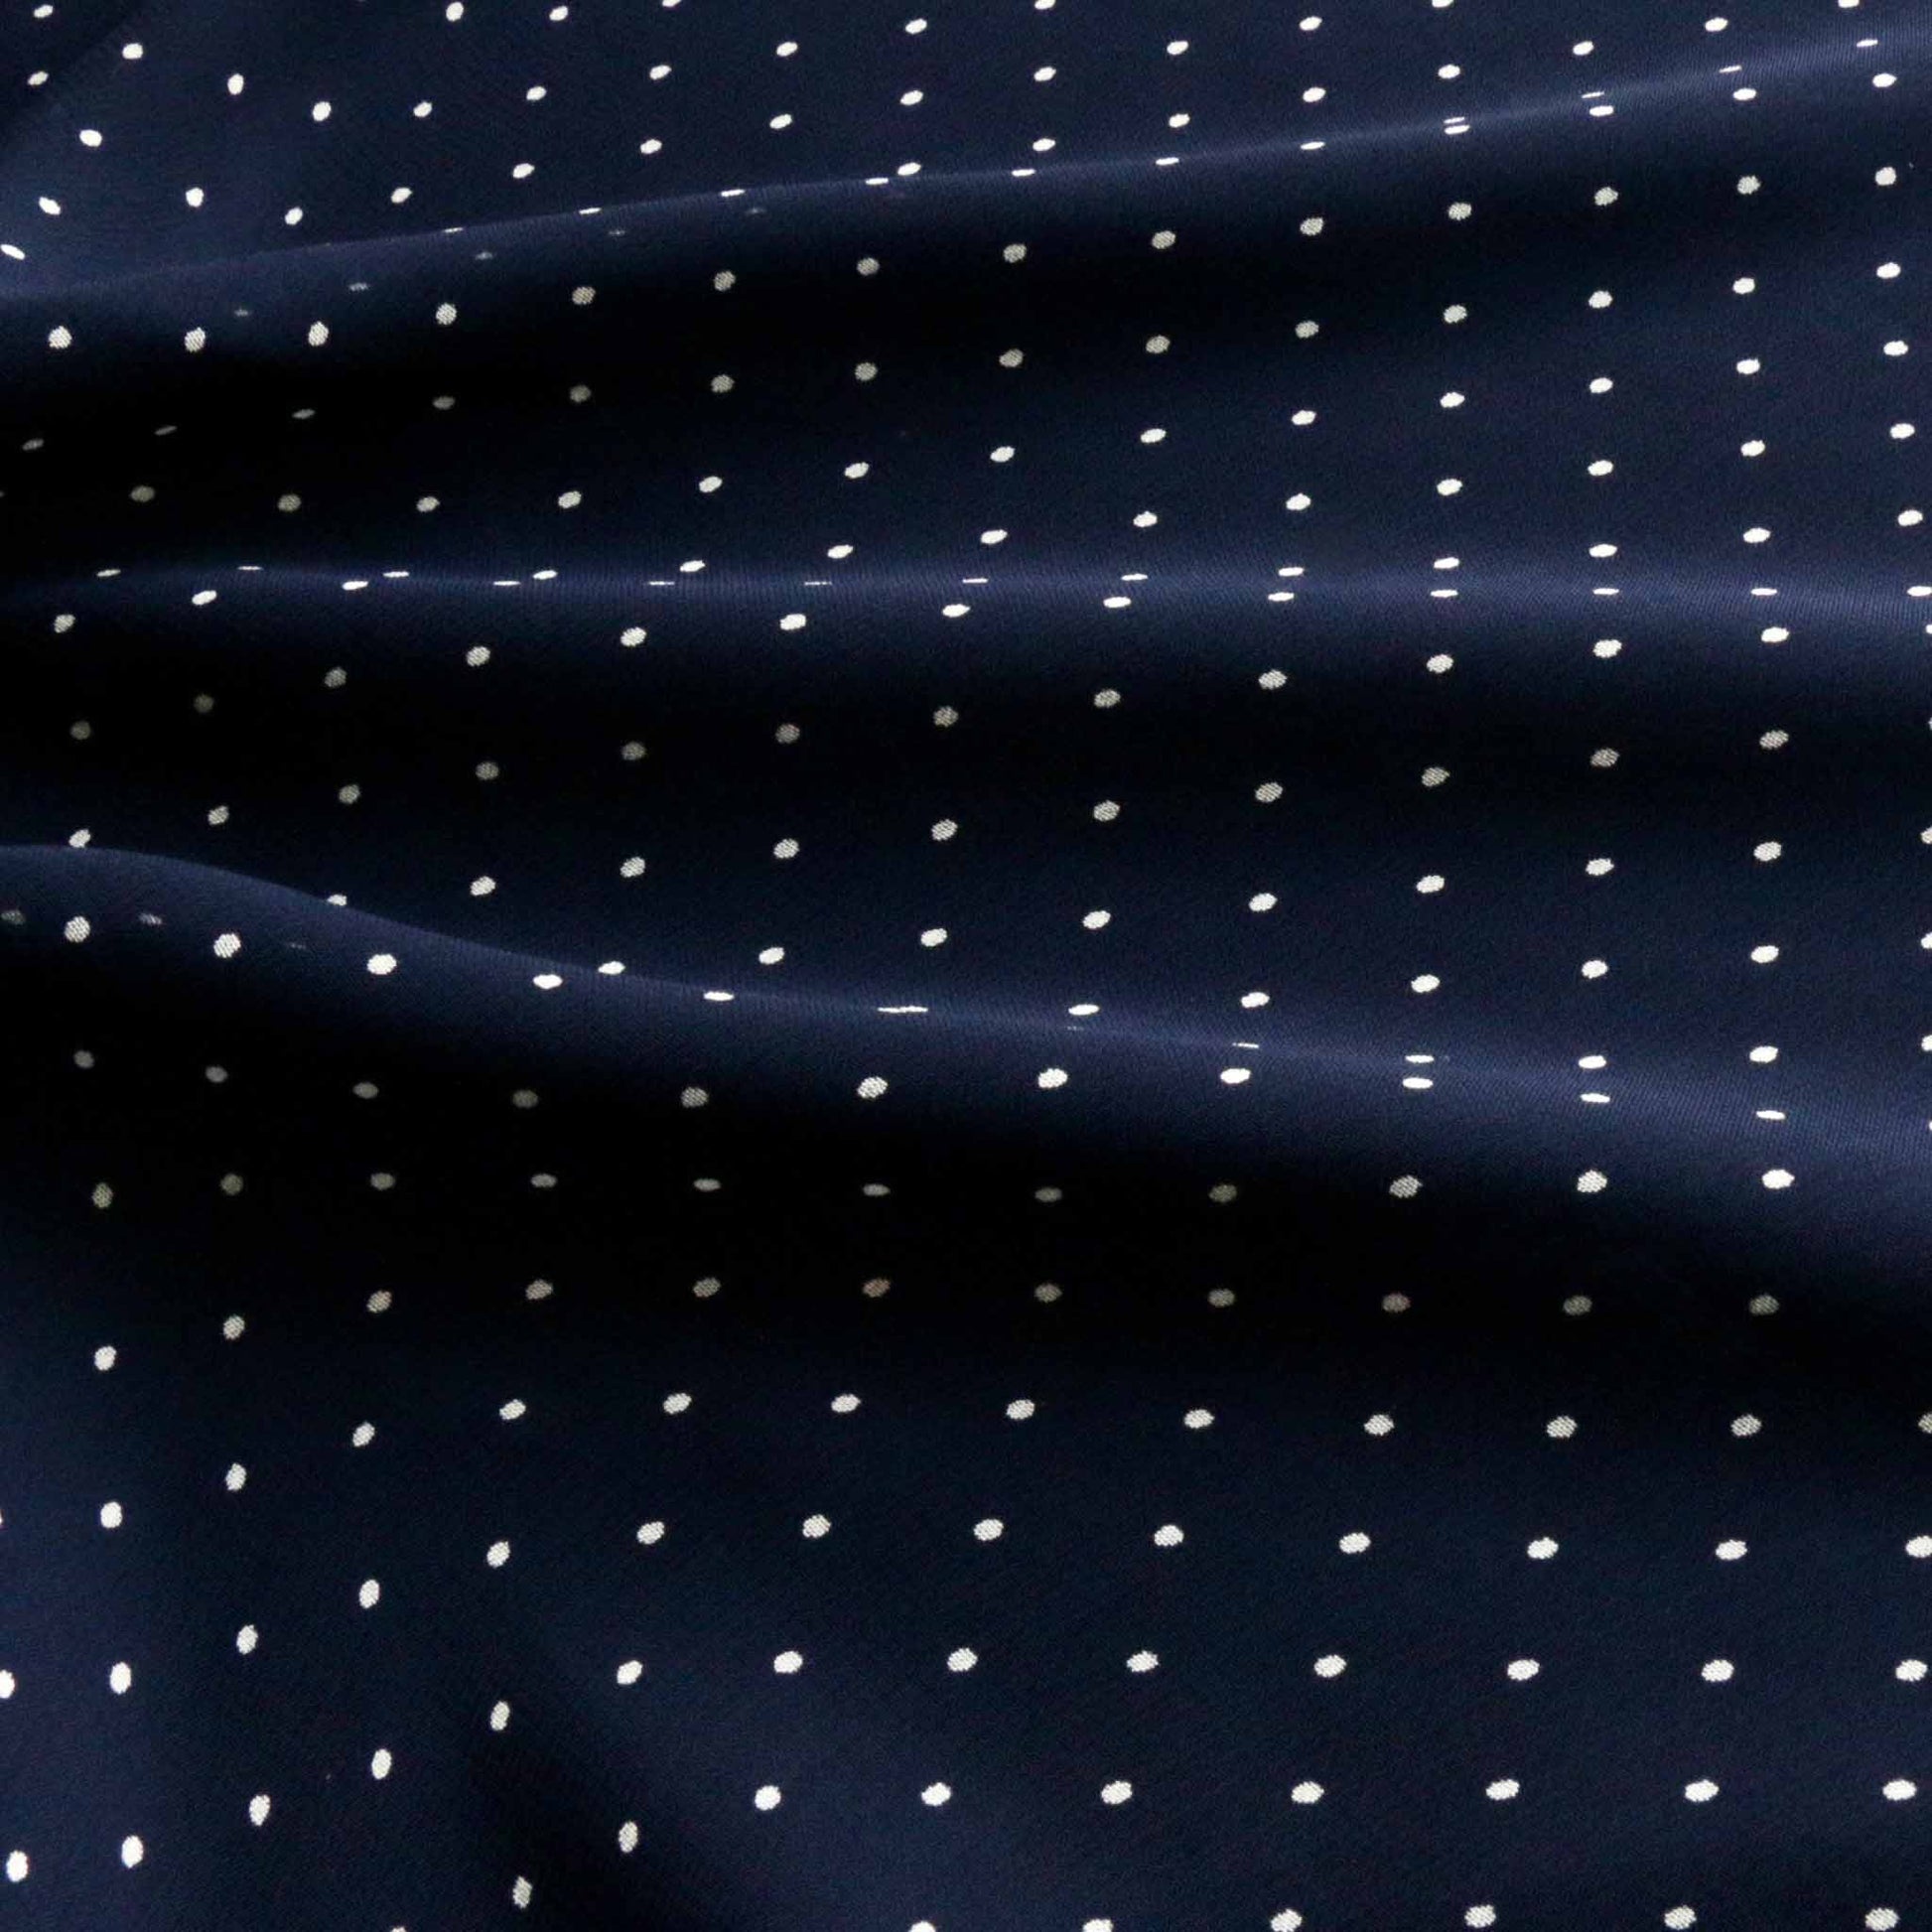 blue and white polka dots on viscose chiffon dressmaking fabric